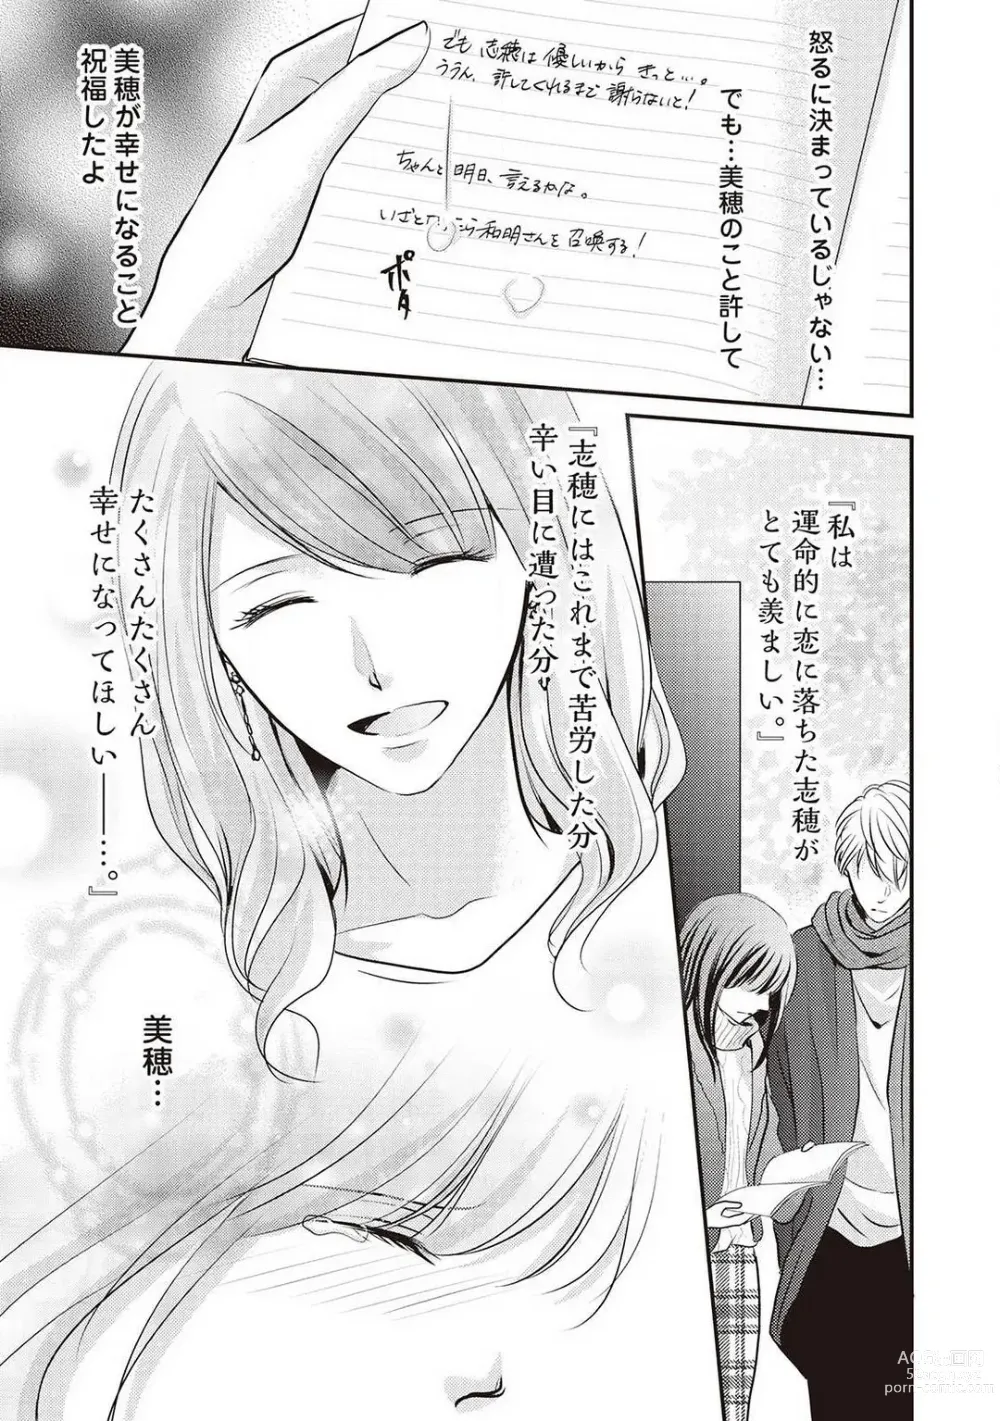 Page 172 of manga Migawari no Konyakusha wa Koi ni Naku.